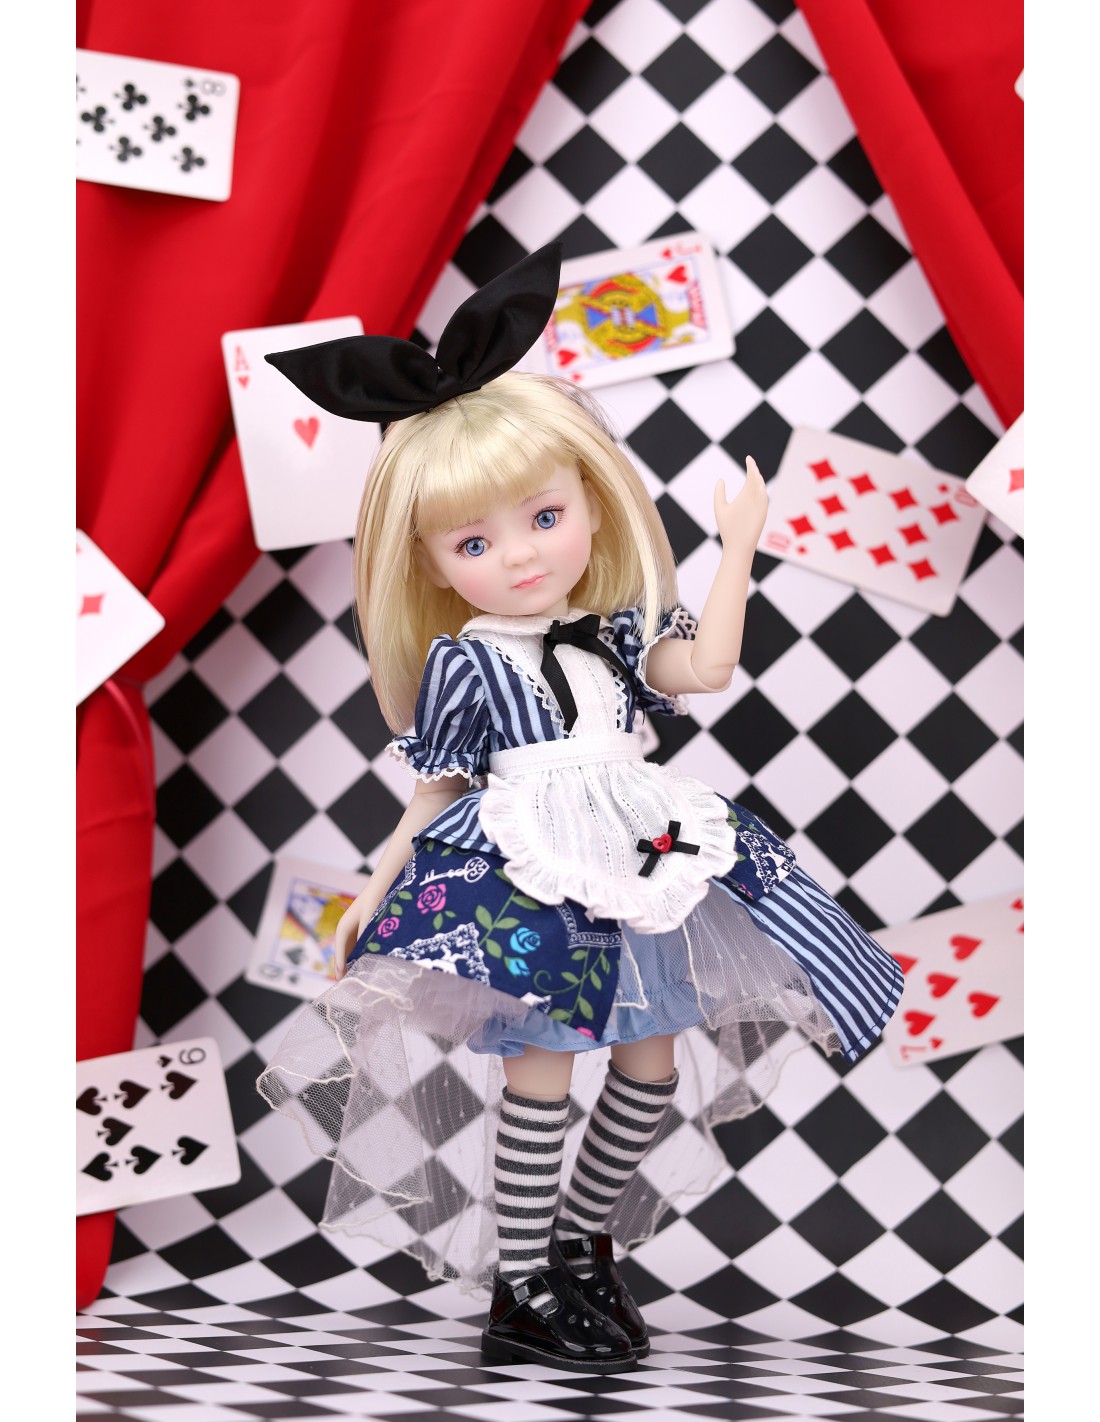 Alice Classic Doll Alice in Wonderland 11